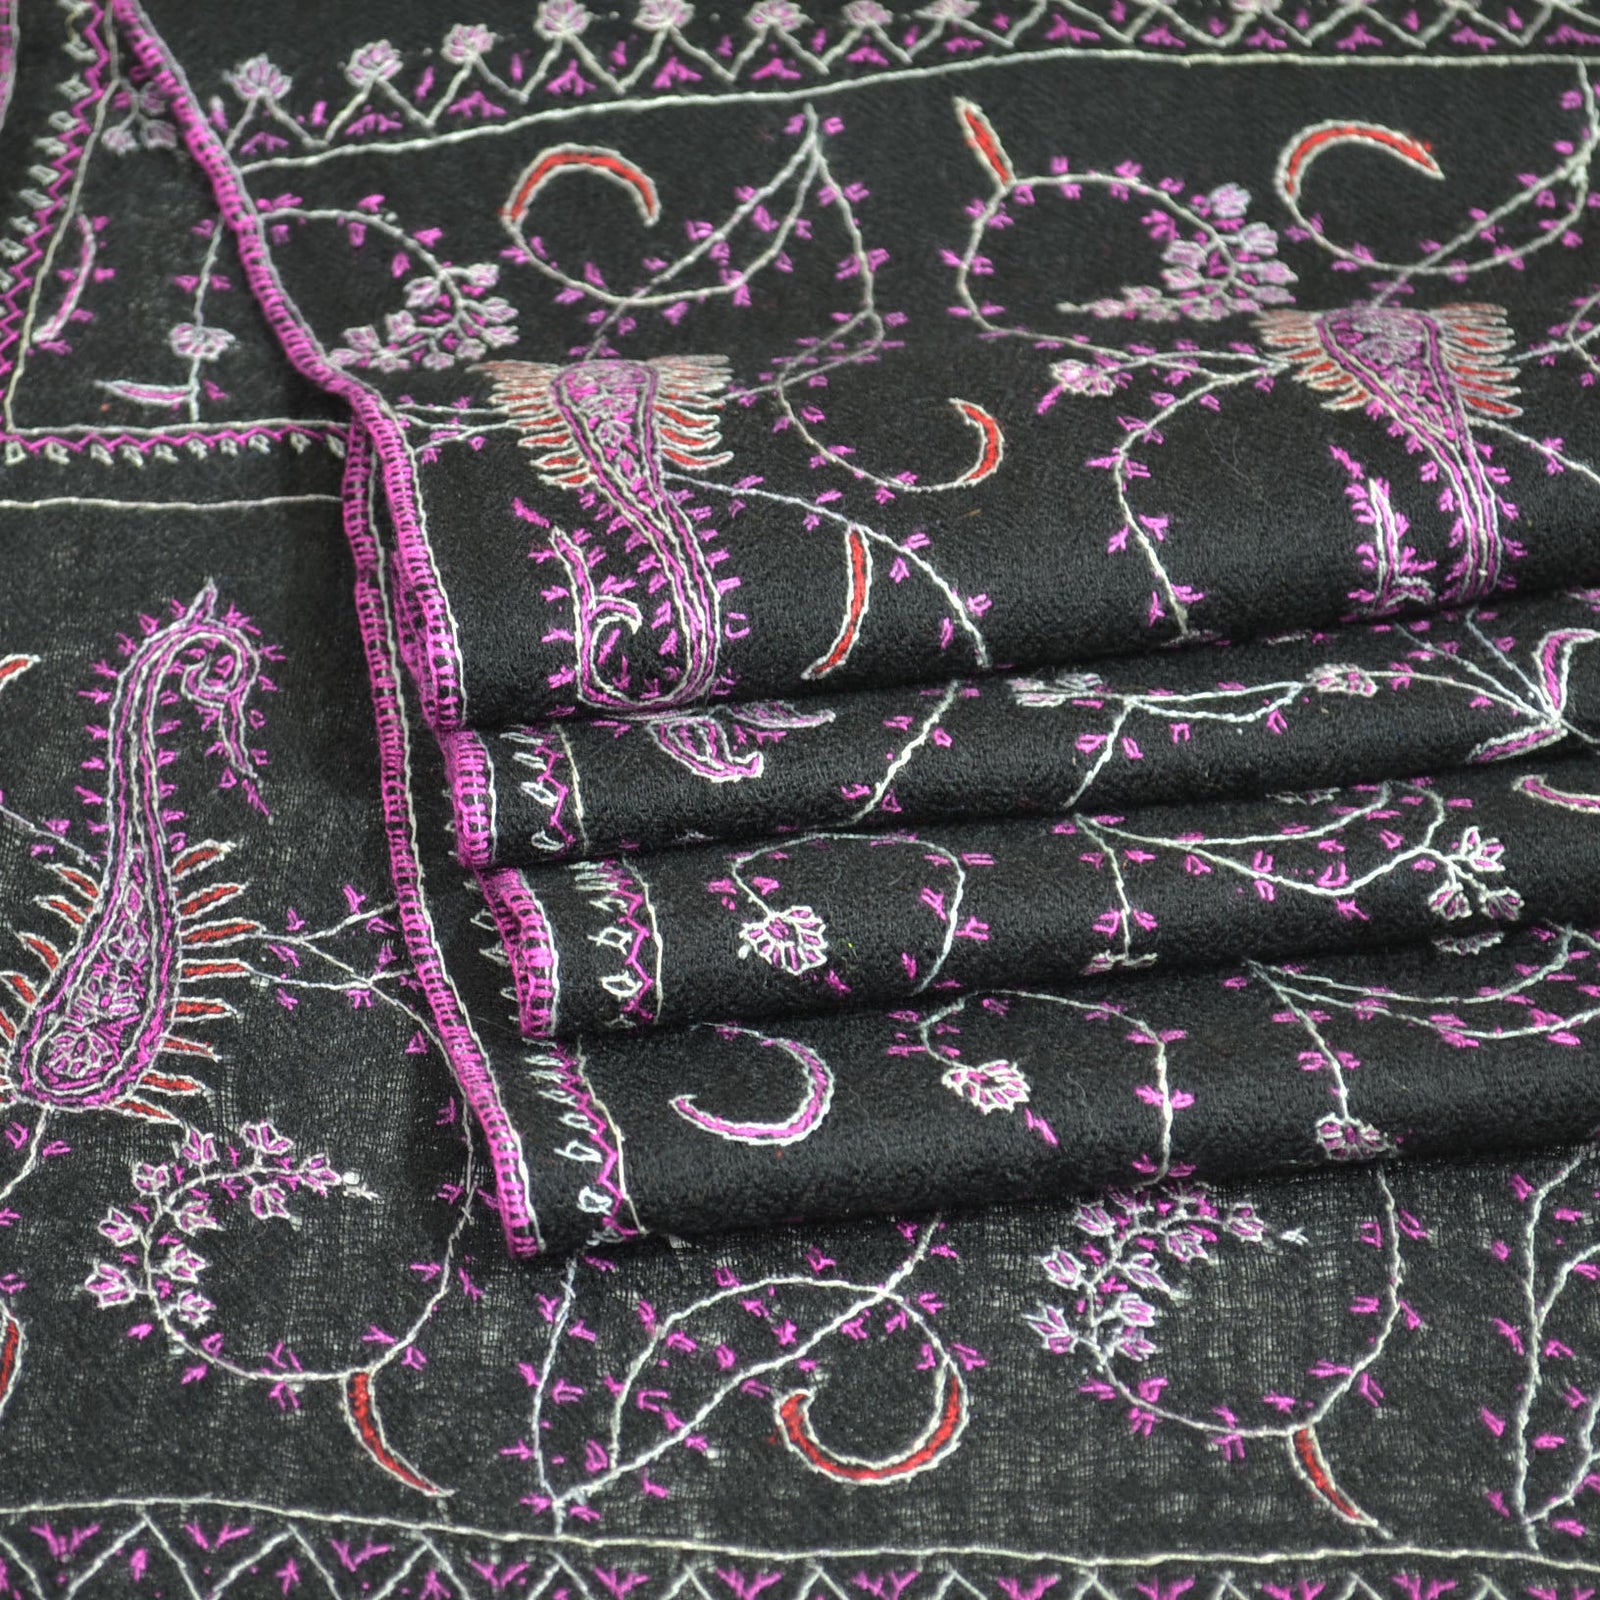 Black Jali Embroidery Pashmina Cashmere Scarf